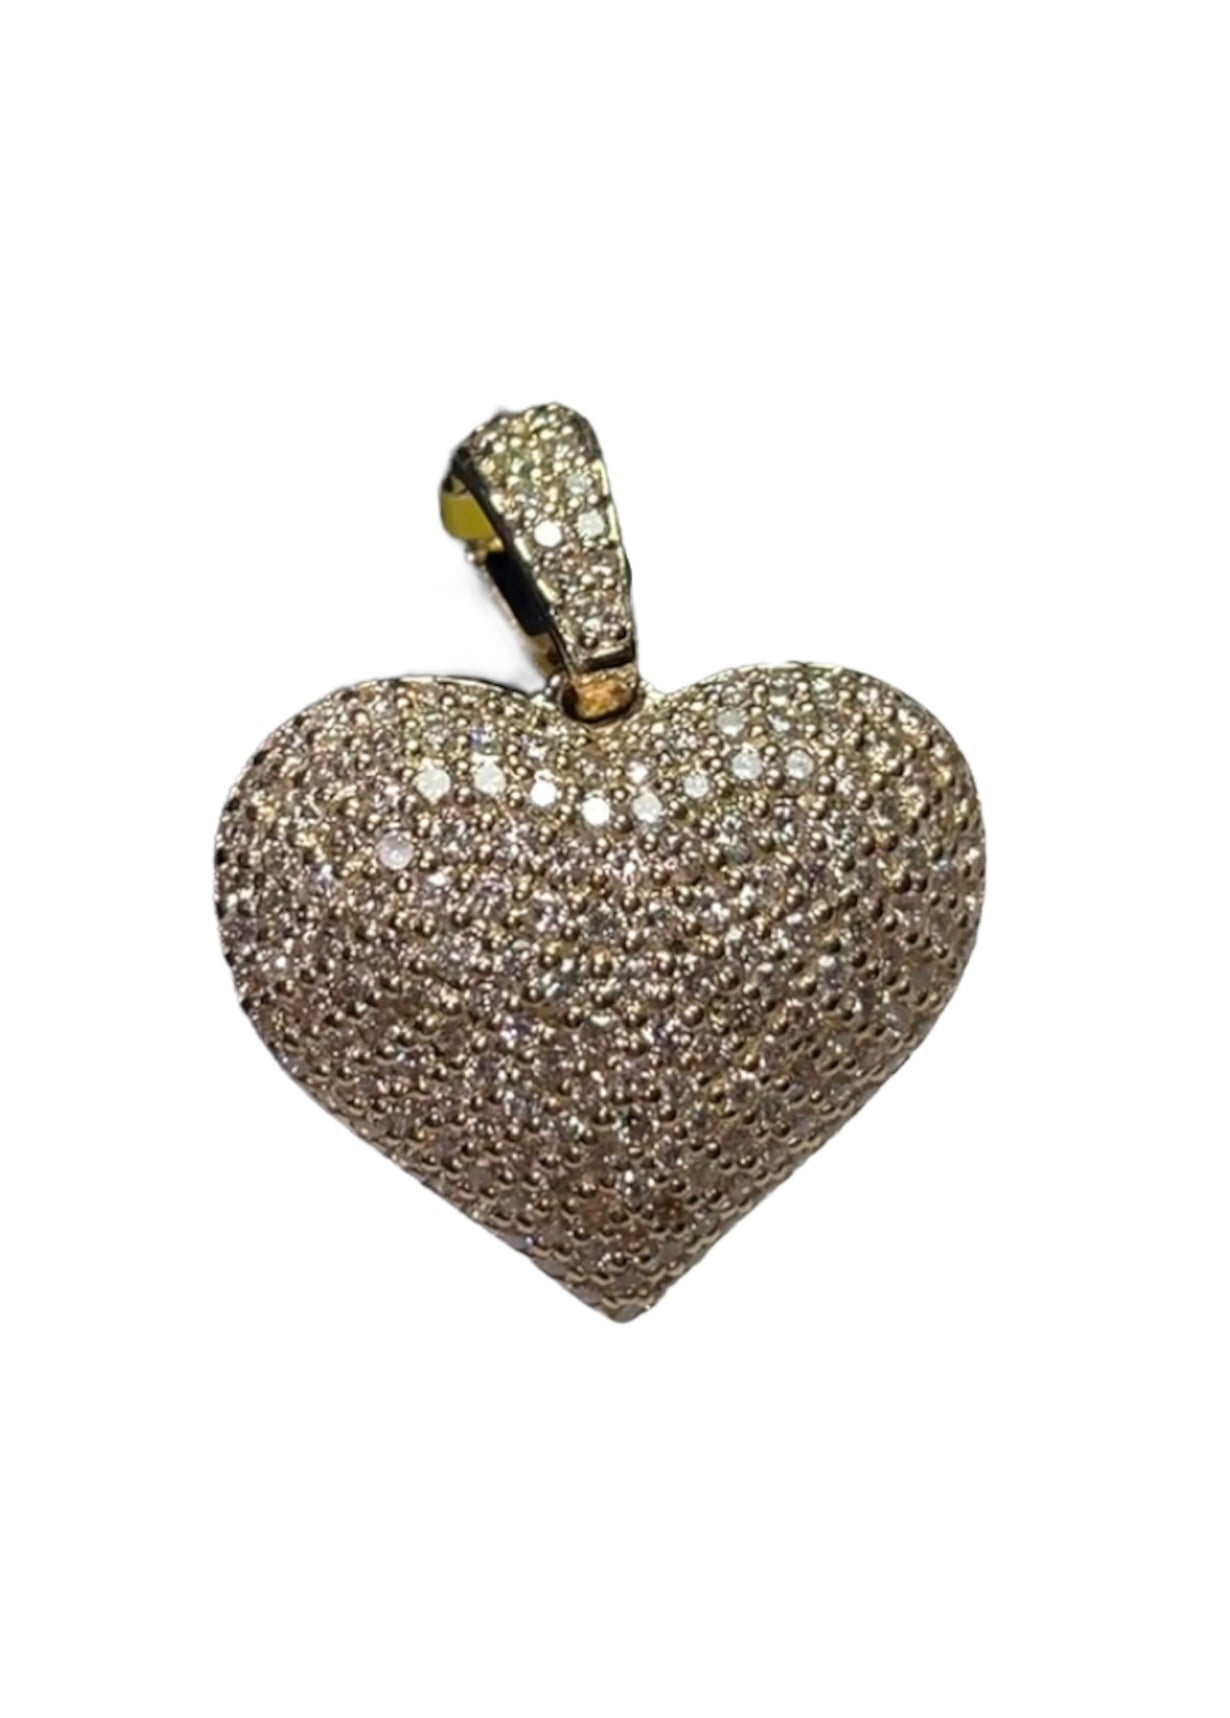 Diamond 3D Heart Pendant 2.00 Carat in 10KT Yellow Gold